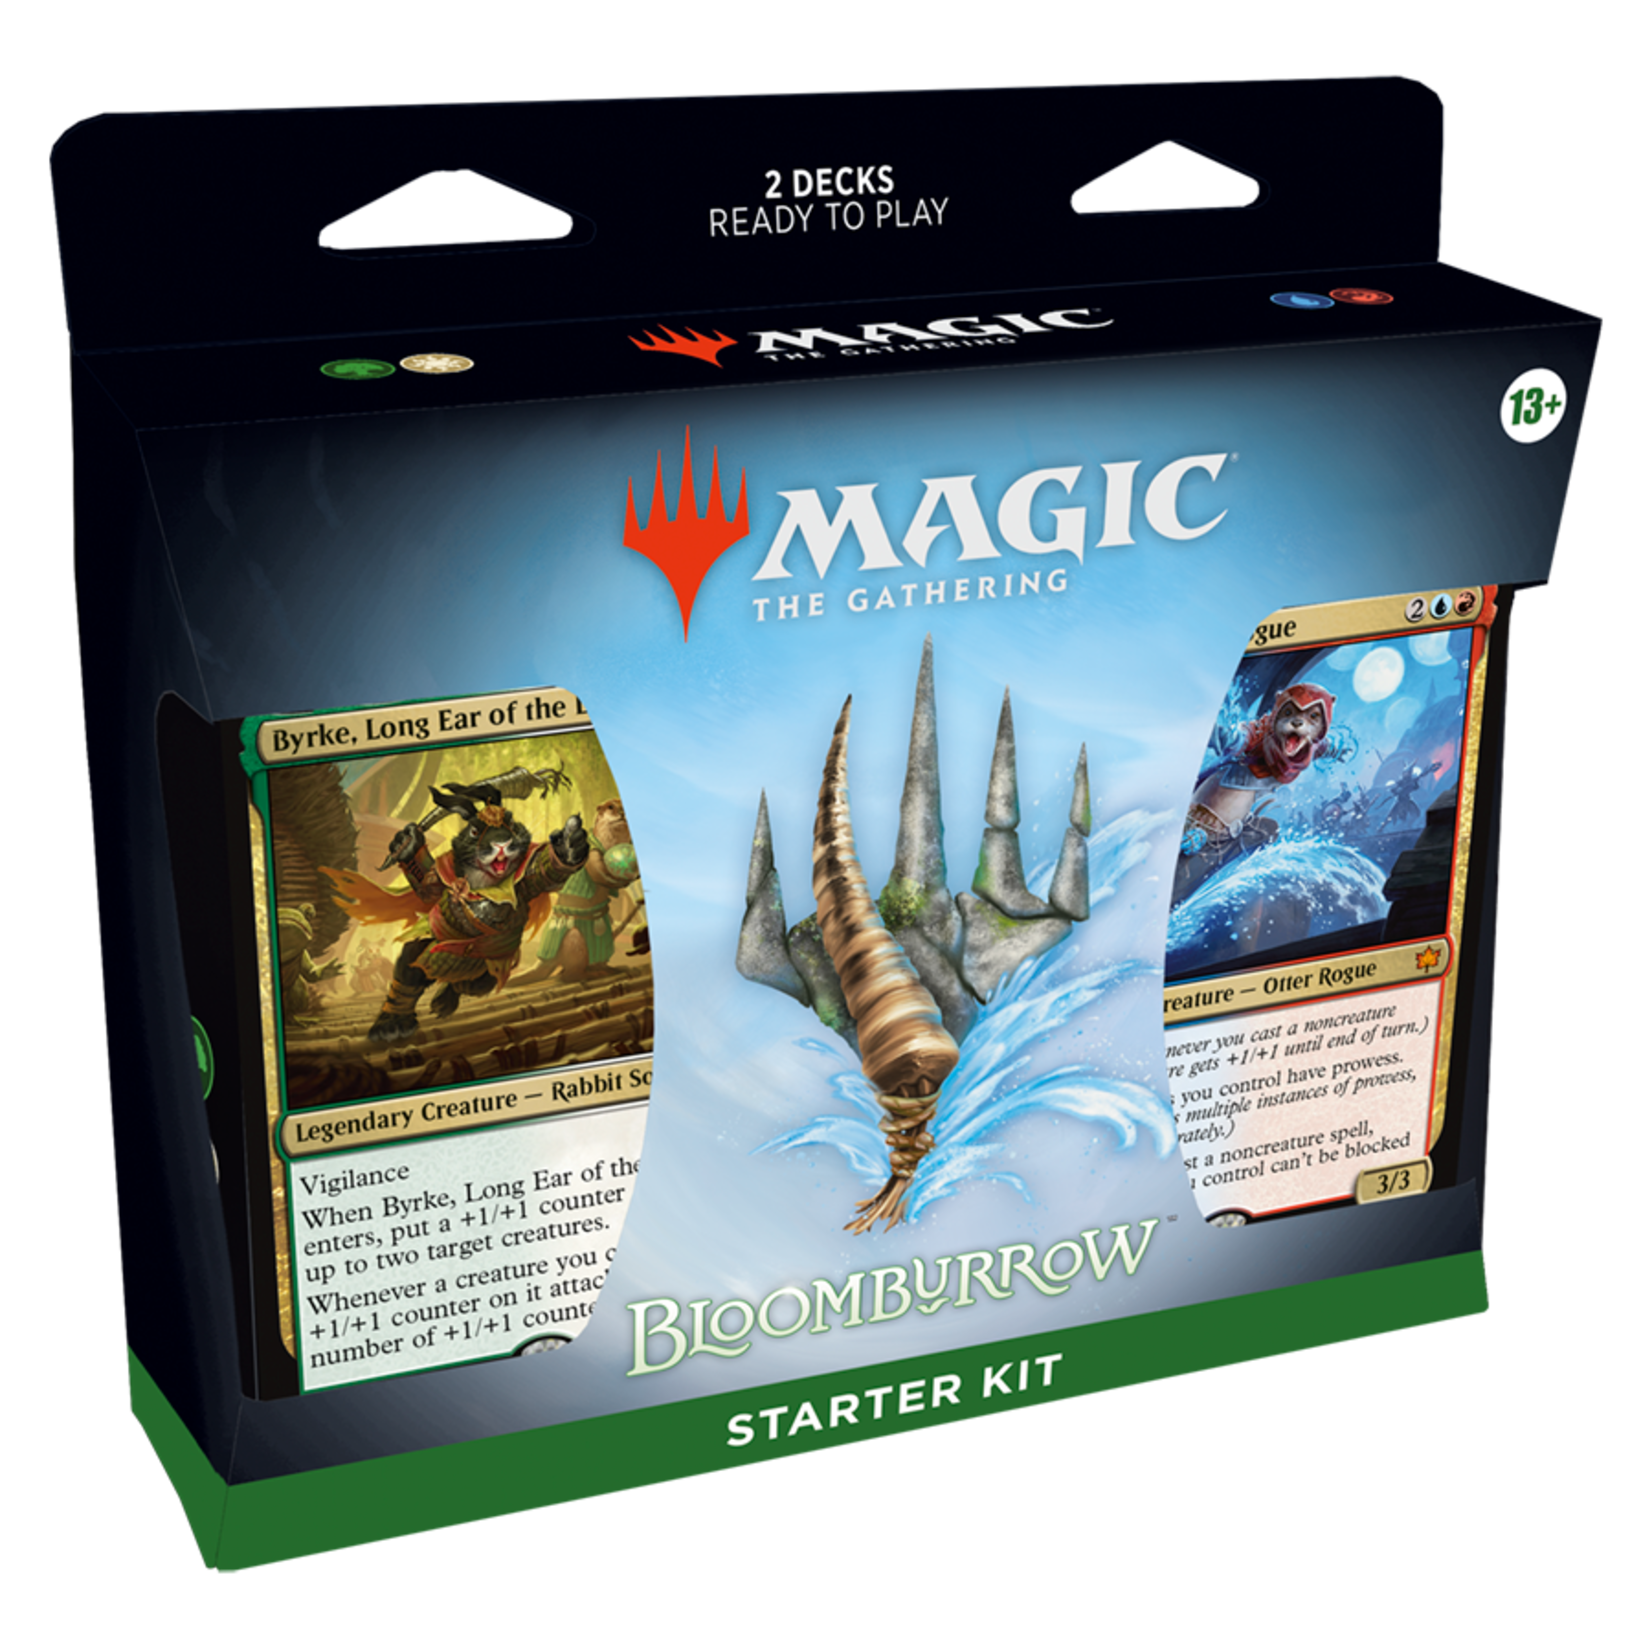 Magic: The Gathering Magic: The Gathering – Bloomburrow Starter Kit